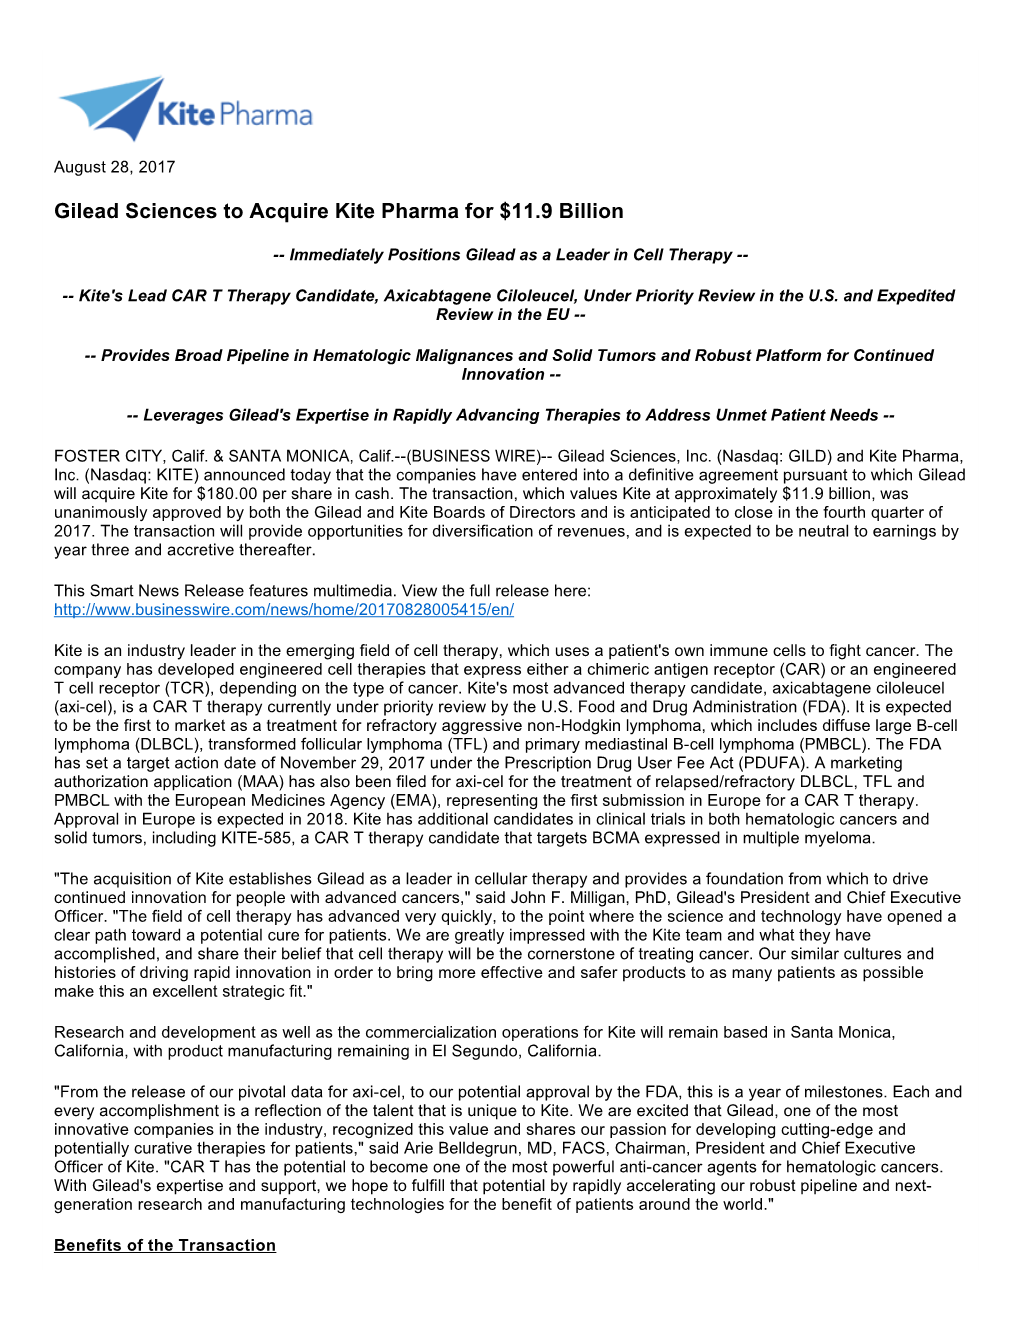 Gilead Sciences to Acquire Kite Pharma for $11.9 Billion